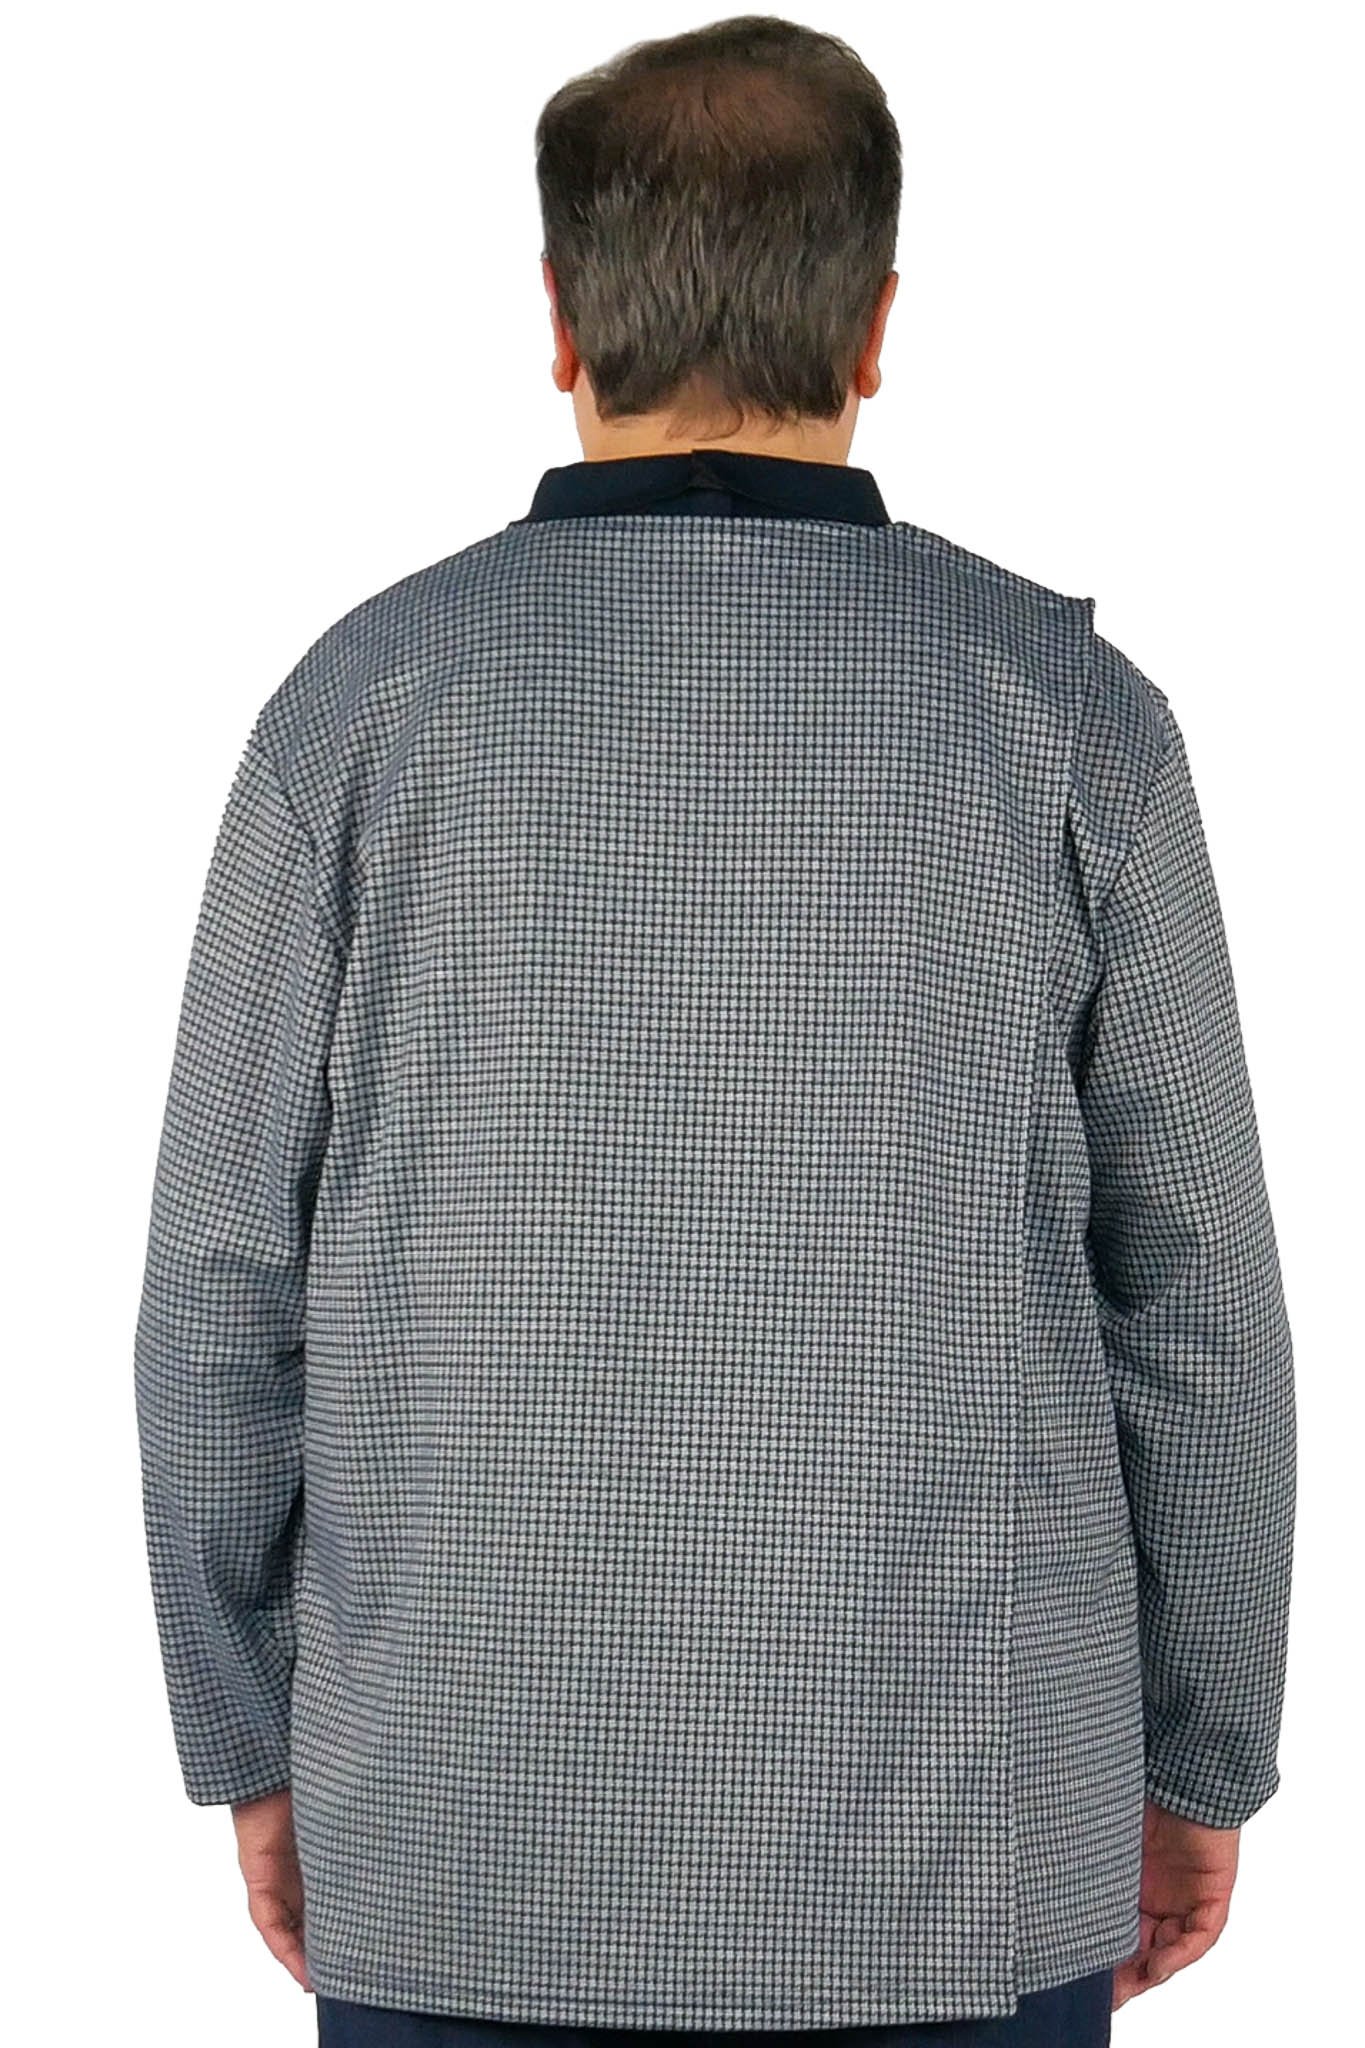 Men's Long-Sleeved Adaptive Polo Shirt | Art in Aging